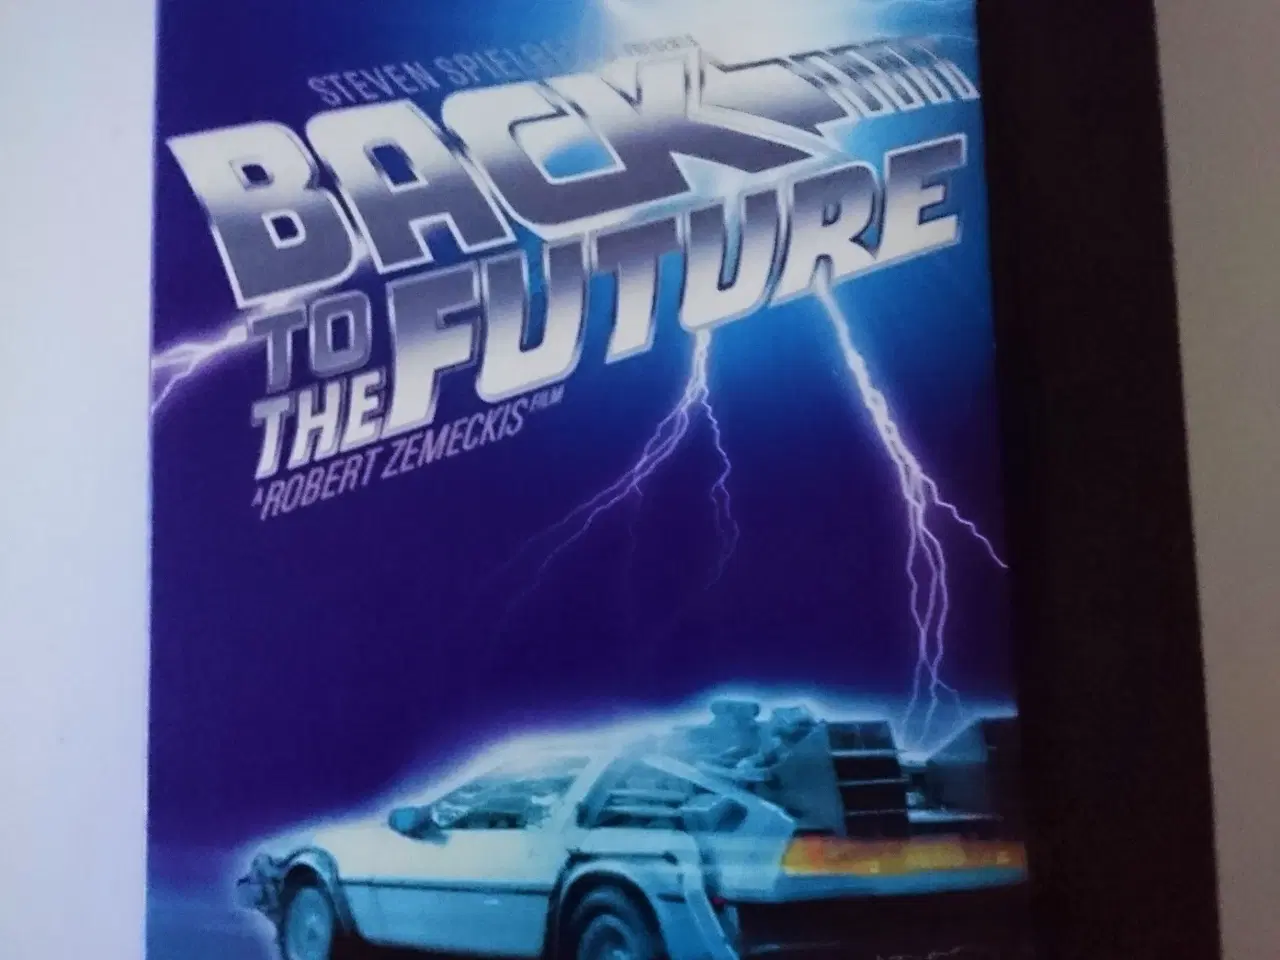 Billede 1 - Back to the future (Trilogy - 3 film)